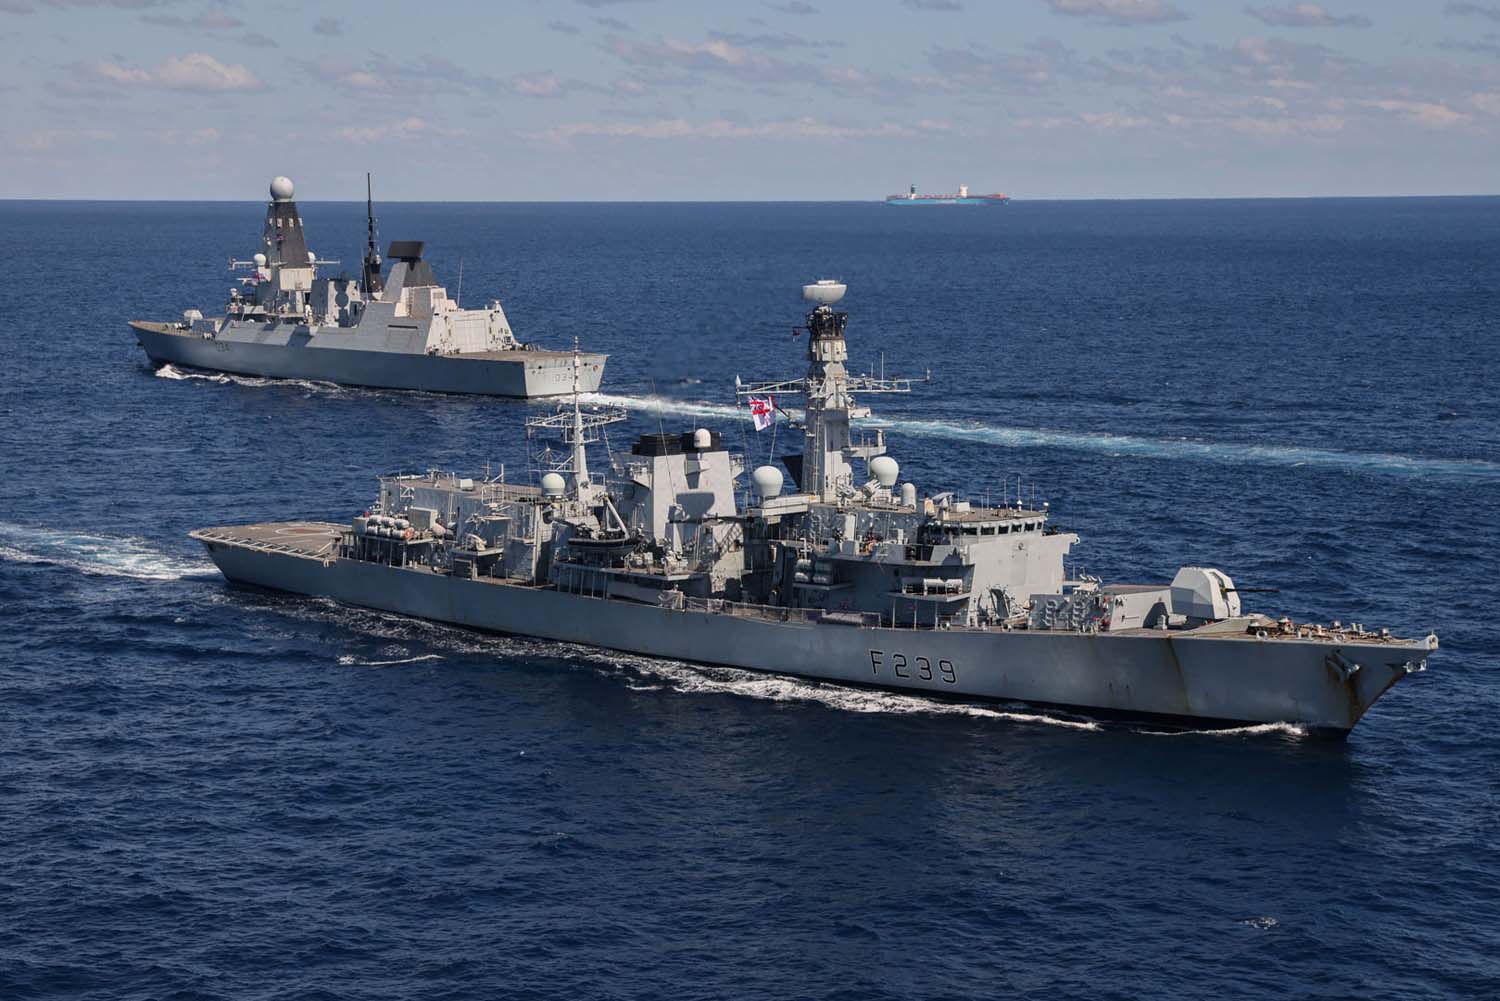 HMS Richmond is a Type 23 frigate of the Royal Navy. Photo courtesy UK Royal Navy